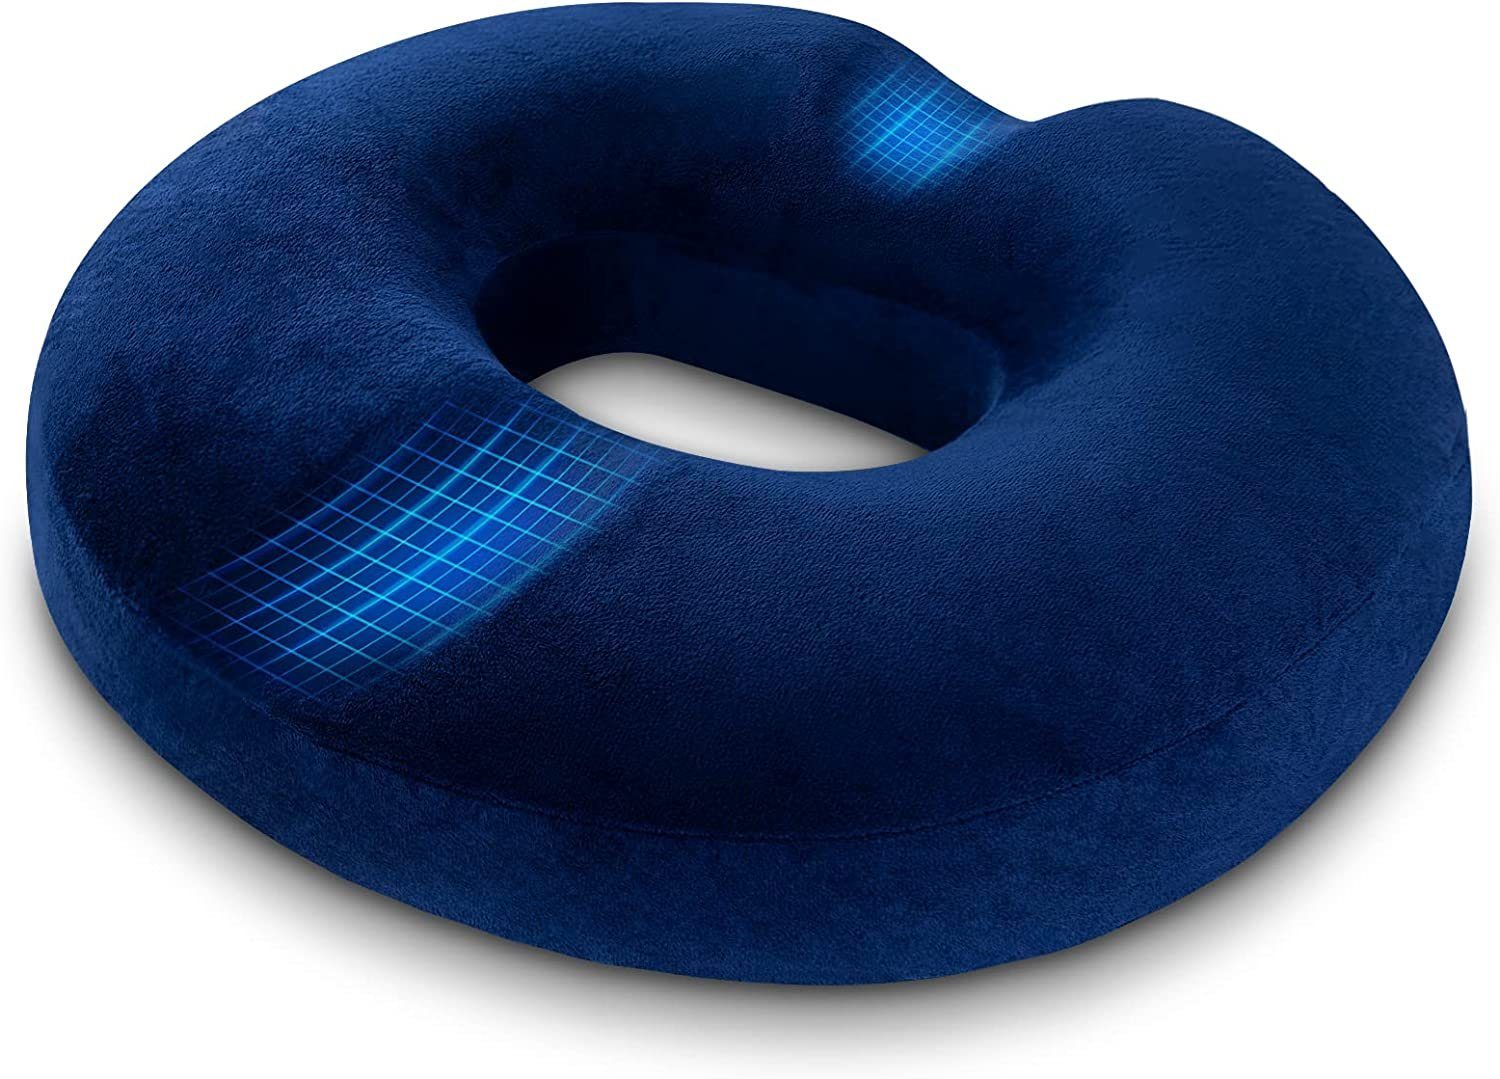 Jormftte Sitzkissen Donut Kissen Orthopädisches Sitzkissen, Ergonomisches Sitzkissen marineblau